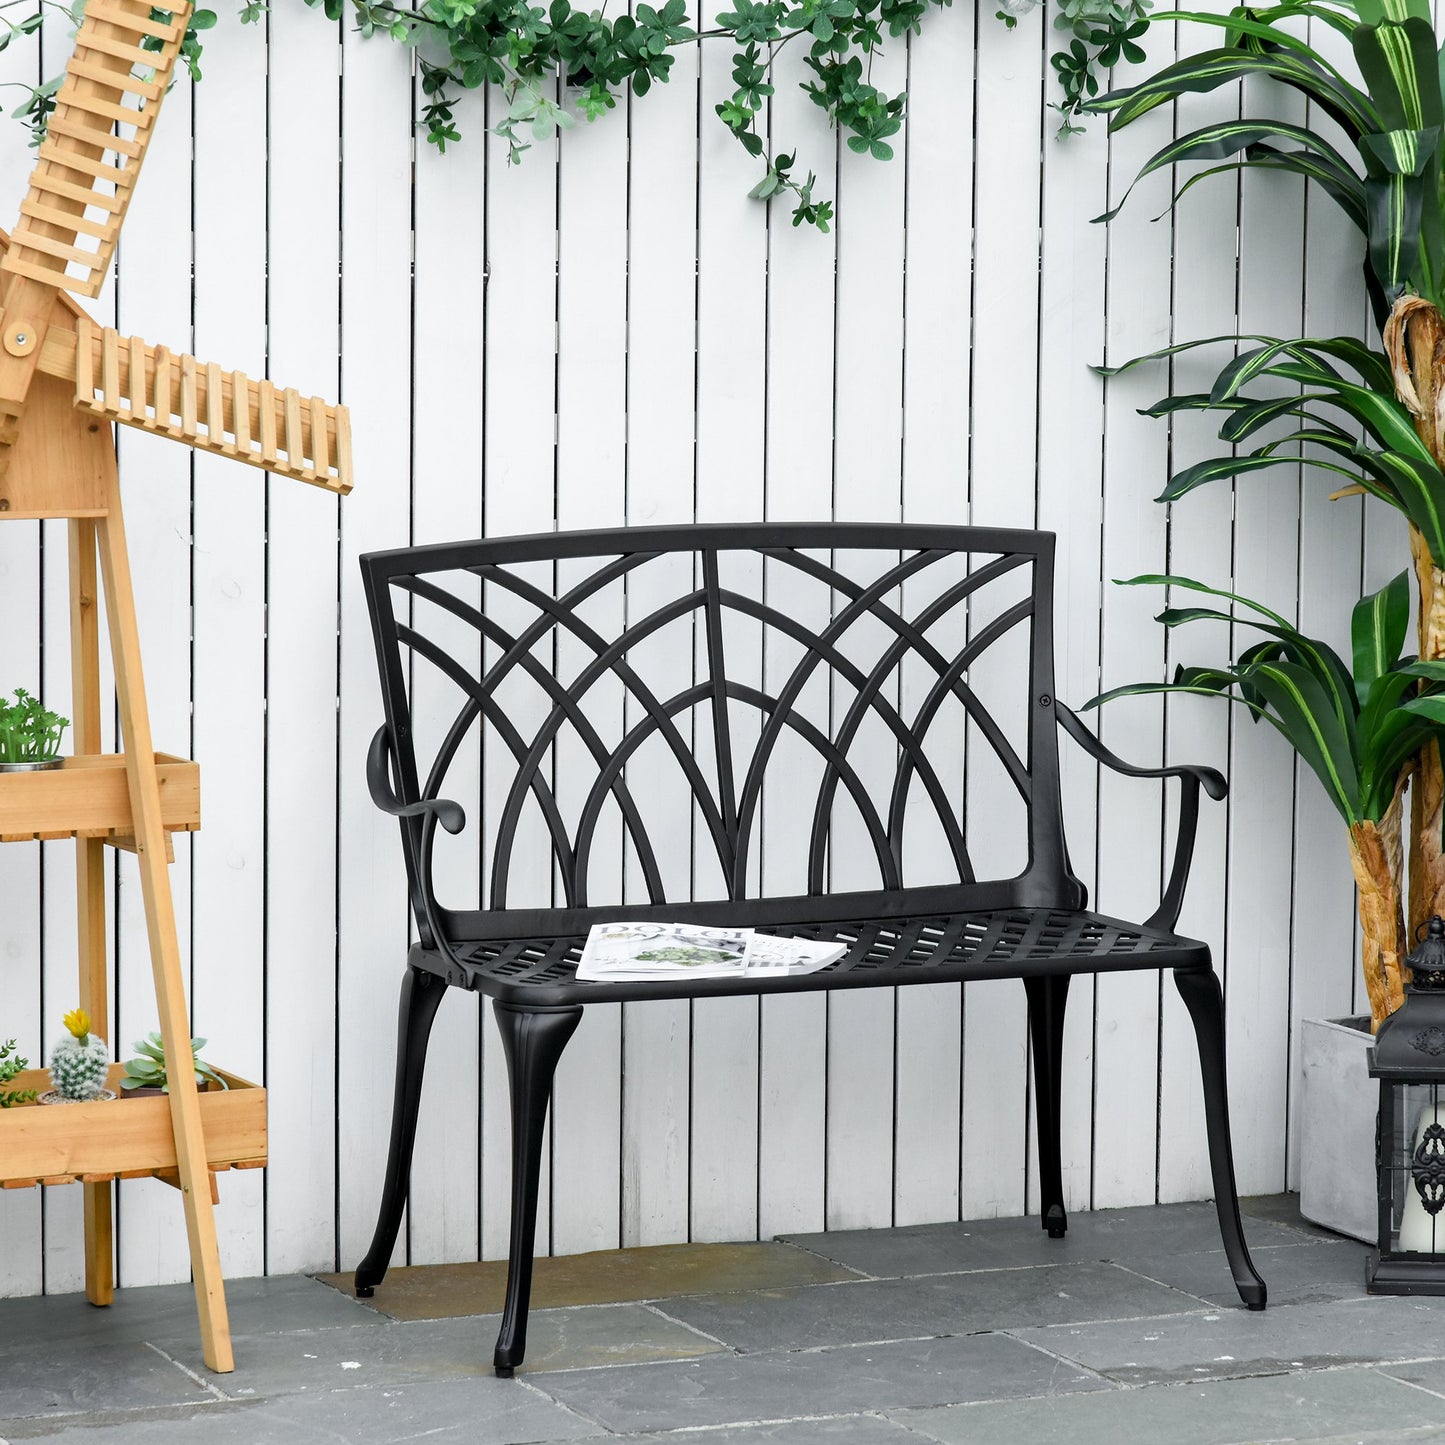 Outsunny 2-Seater Aluminium Garden Bench Decorative Patio Loveseat Ergonomic Armrest